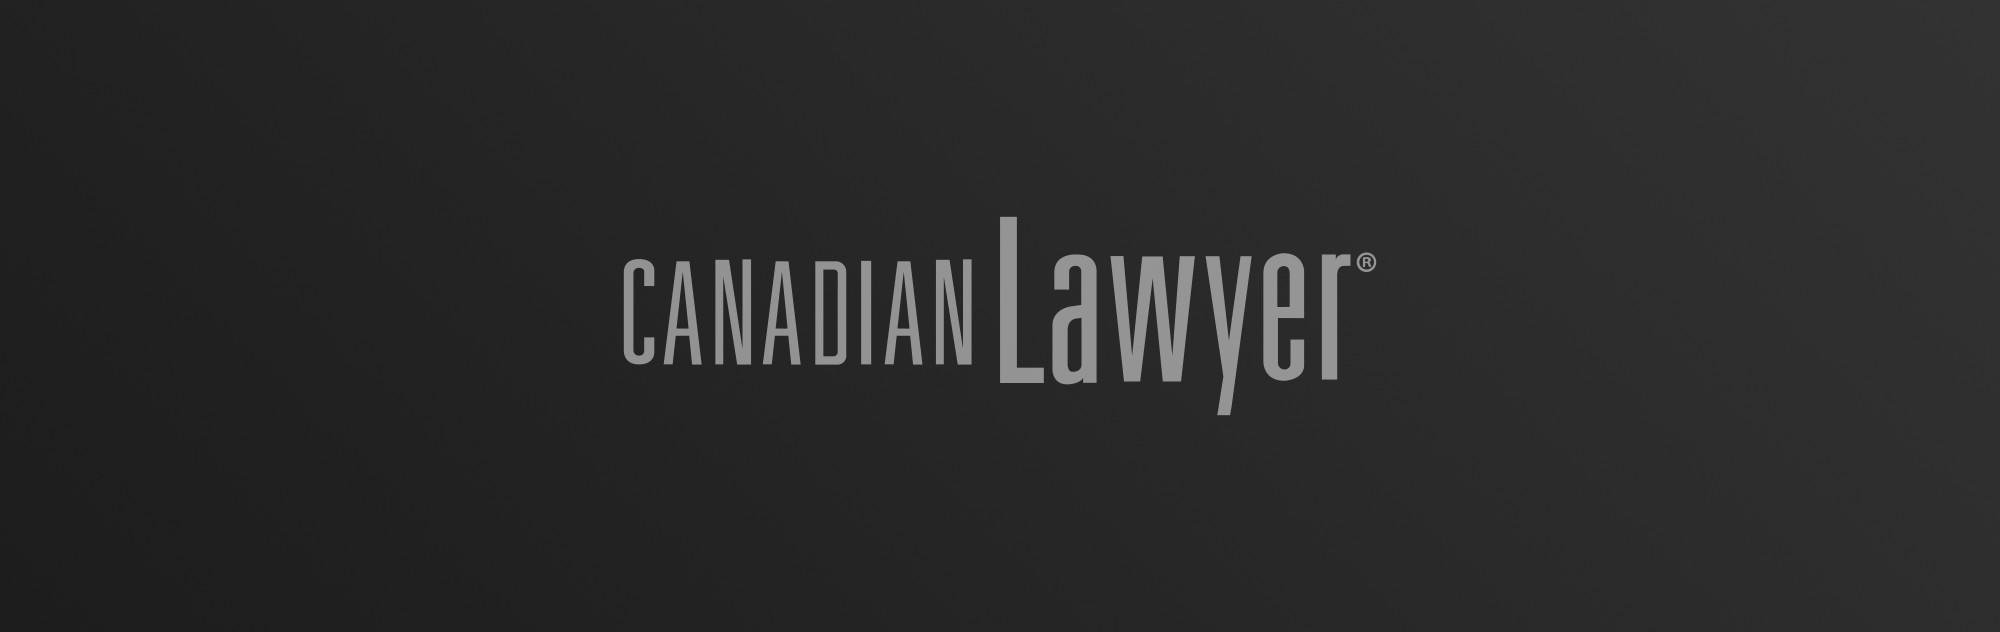 Canadian Lawyer logo on dark gradient background